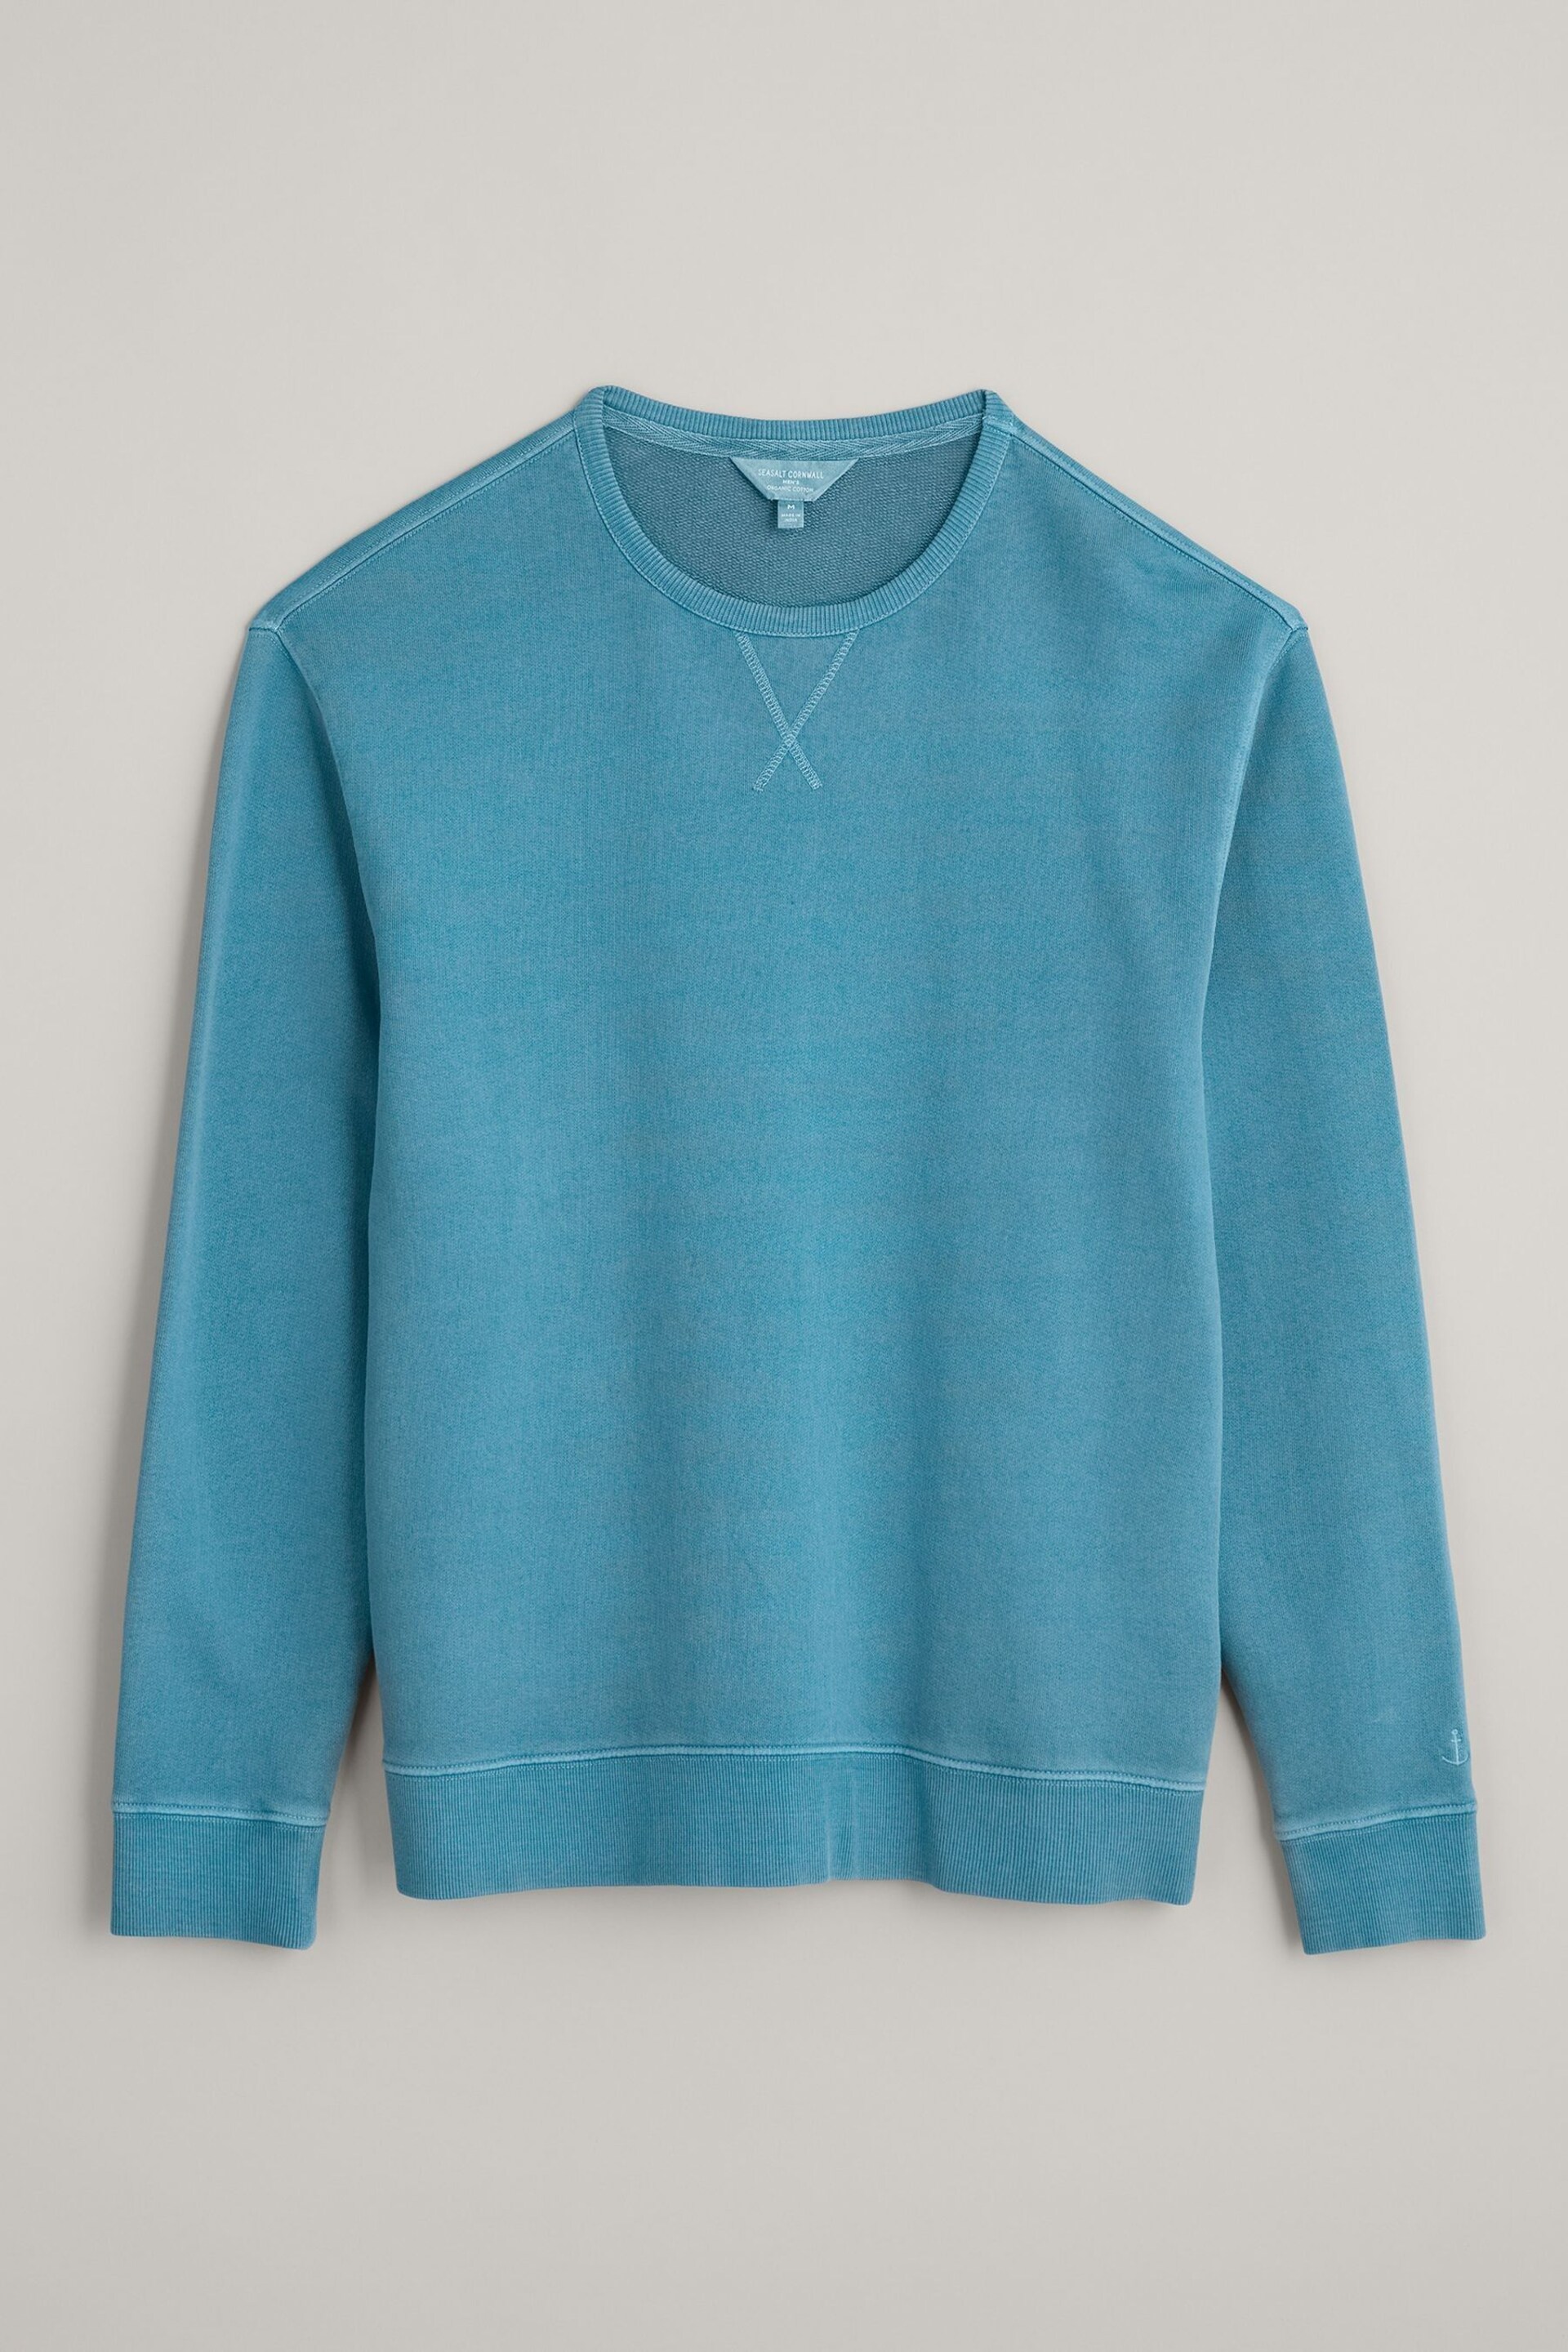 Seasalt Cornwall Blue Mens Bolitho Organic Cotton Sweatshirt - Image 4 of 7